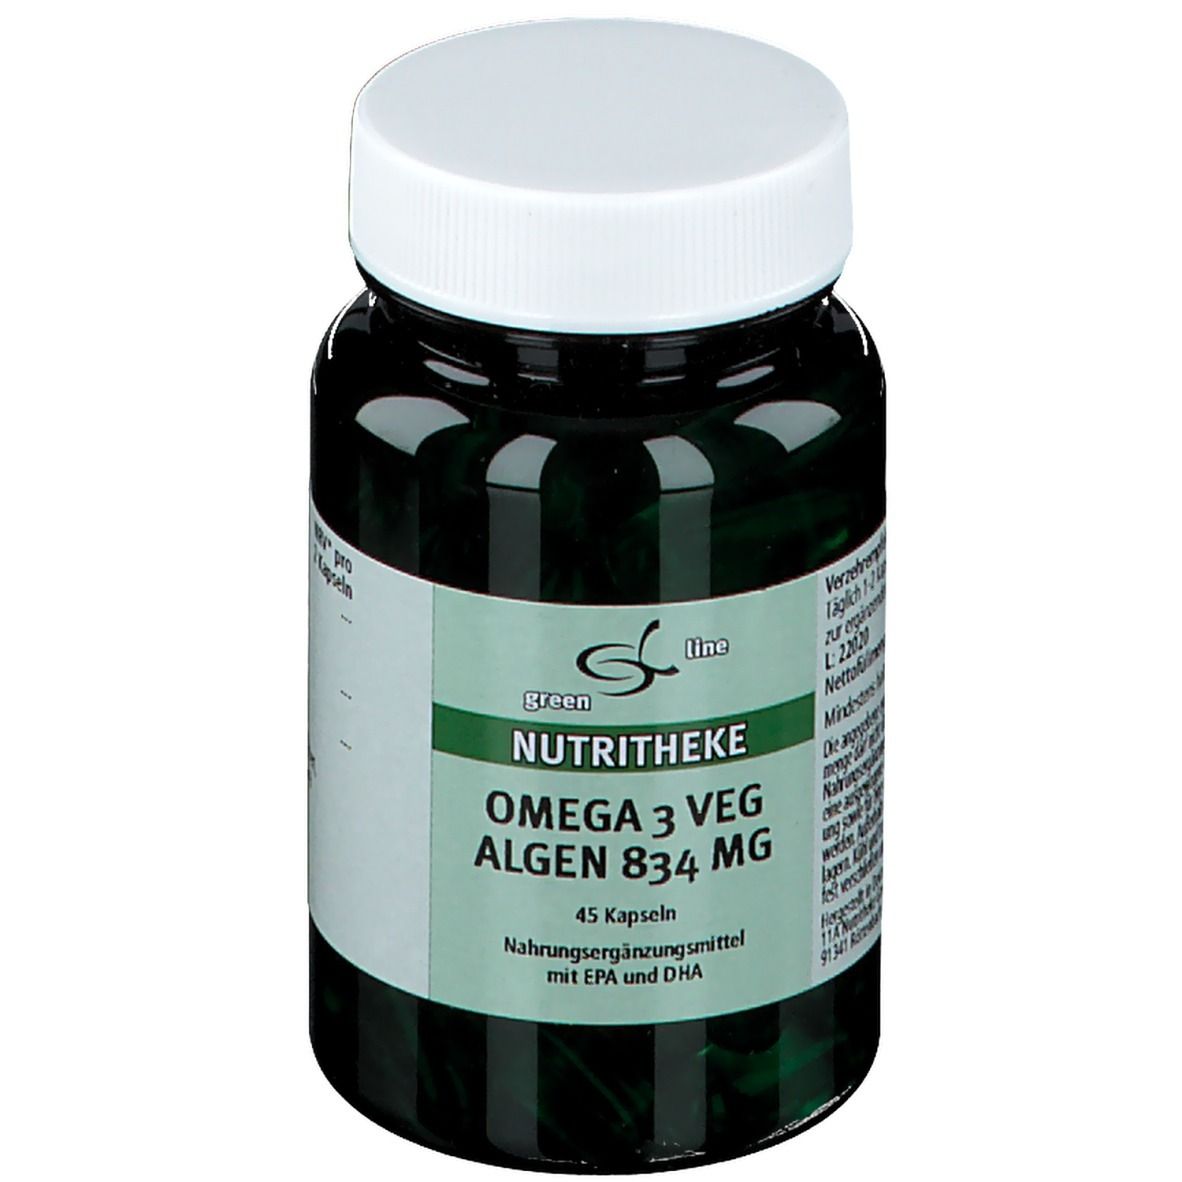 Nutritheke Omega 3 Algen 834 mg